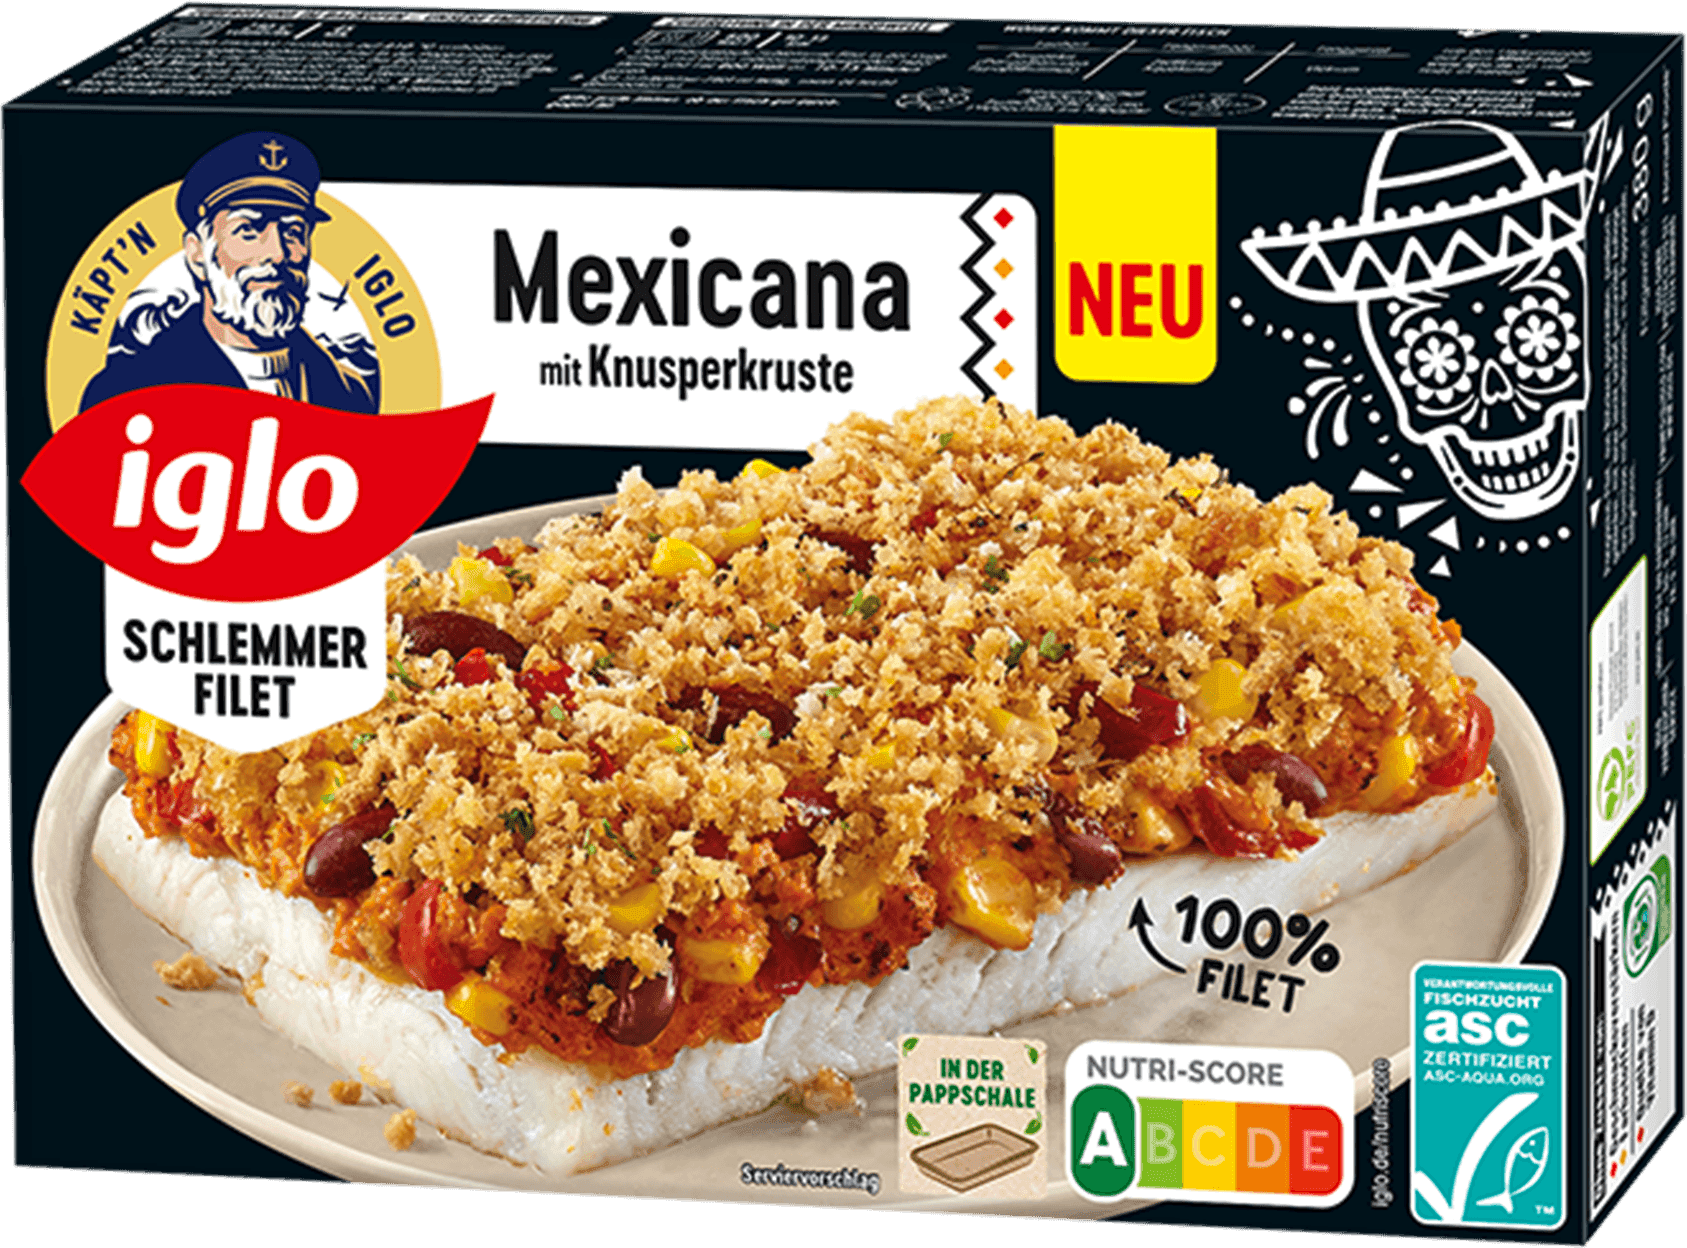 iglo Schlemmer-Filet Mexicana